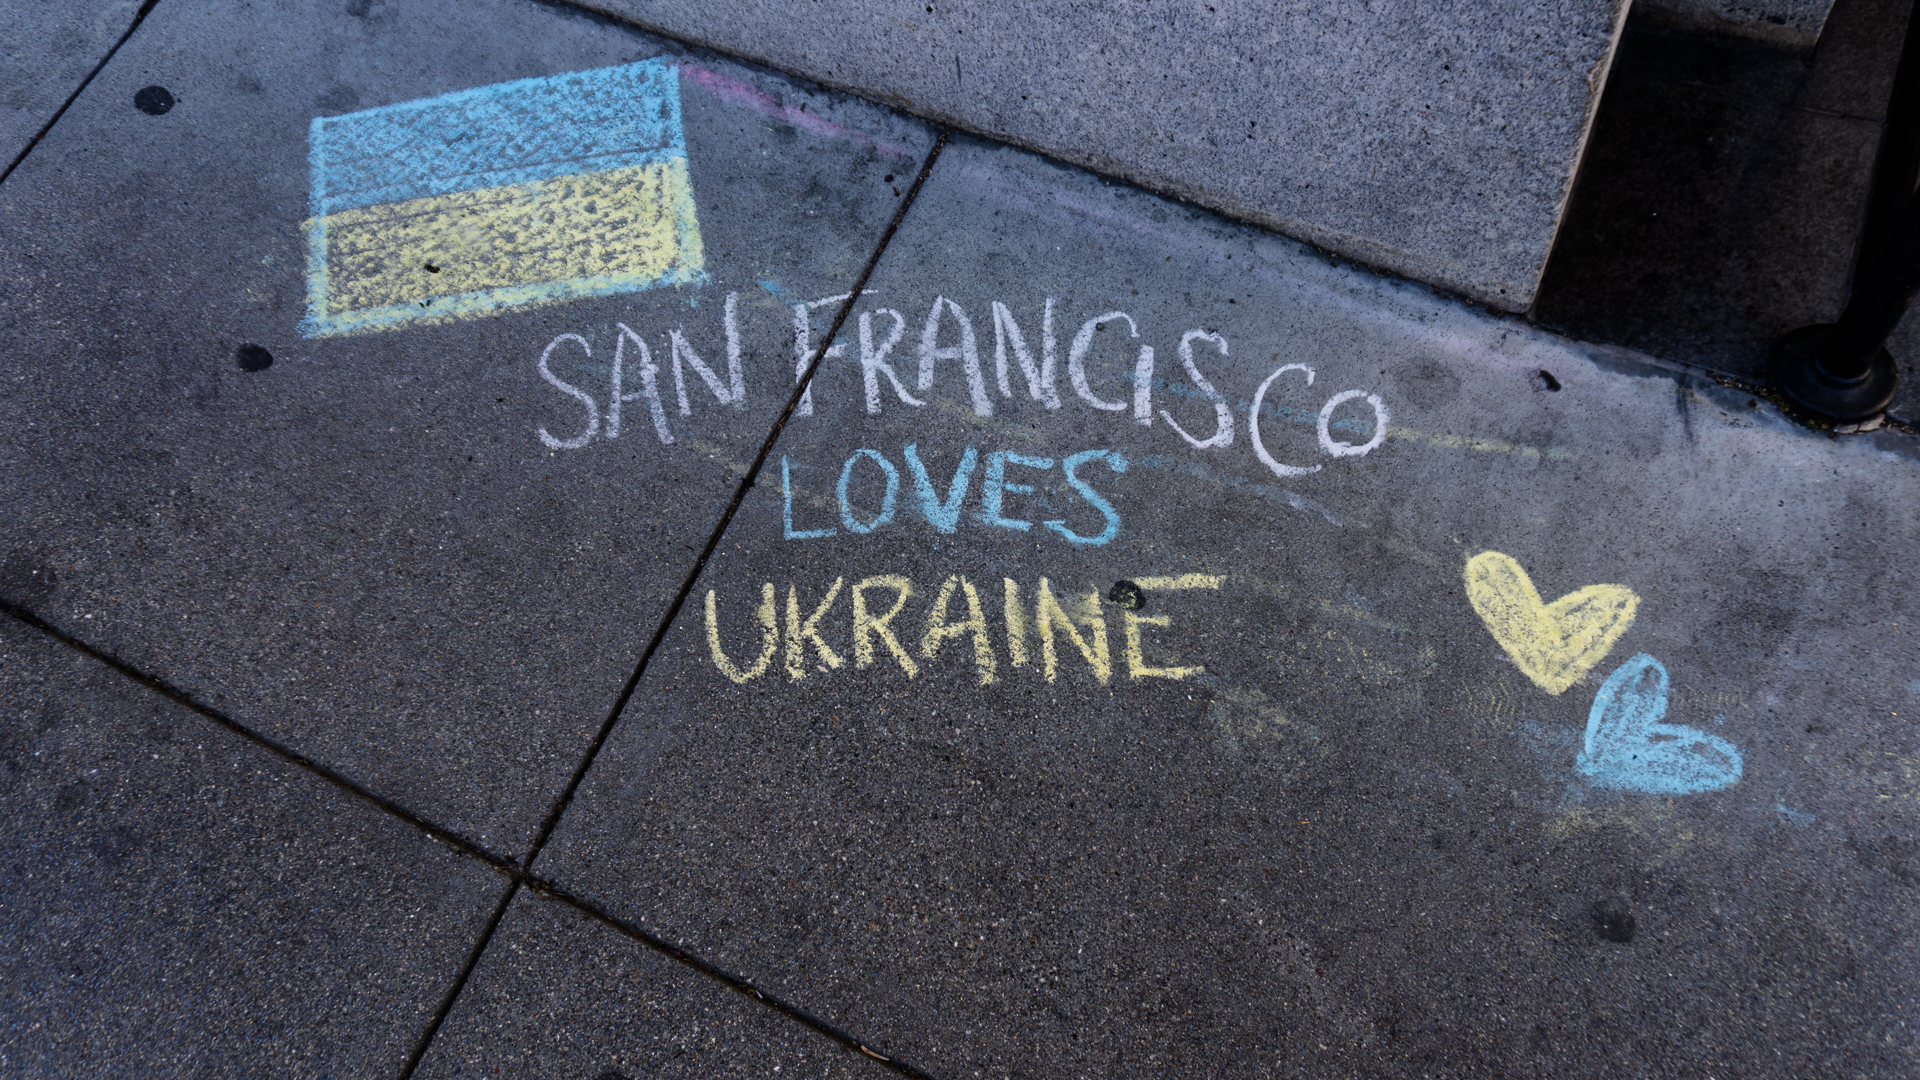 San Francisco Loves Ukraine